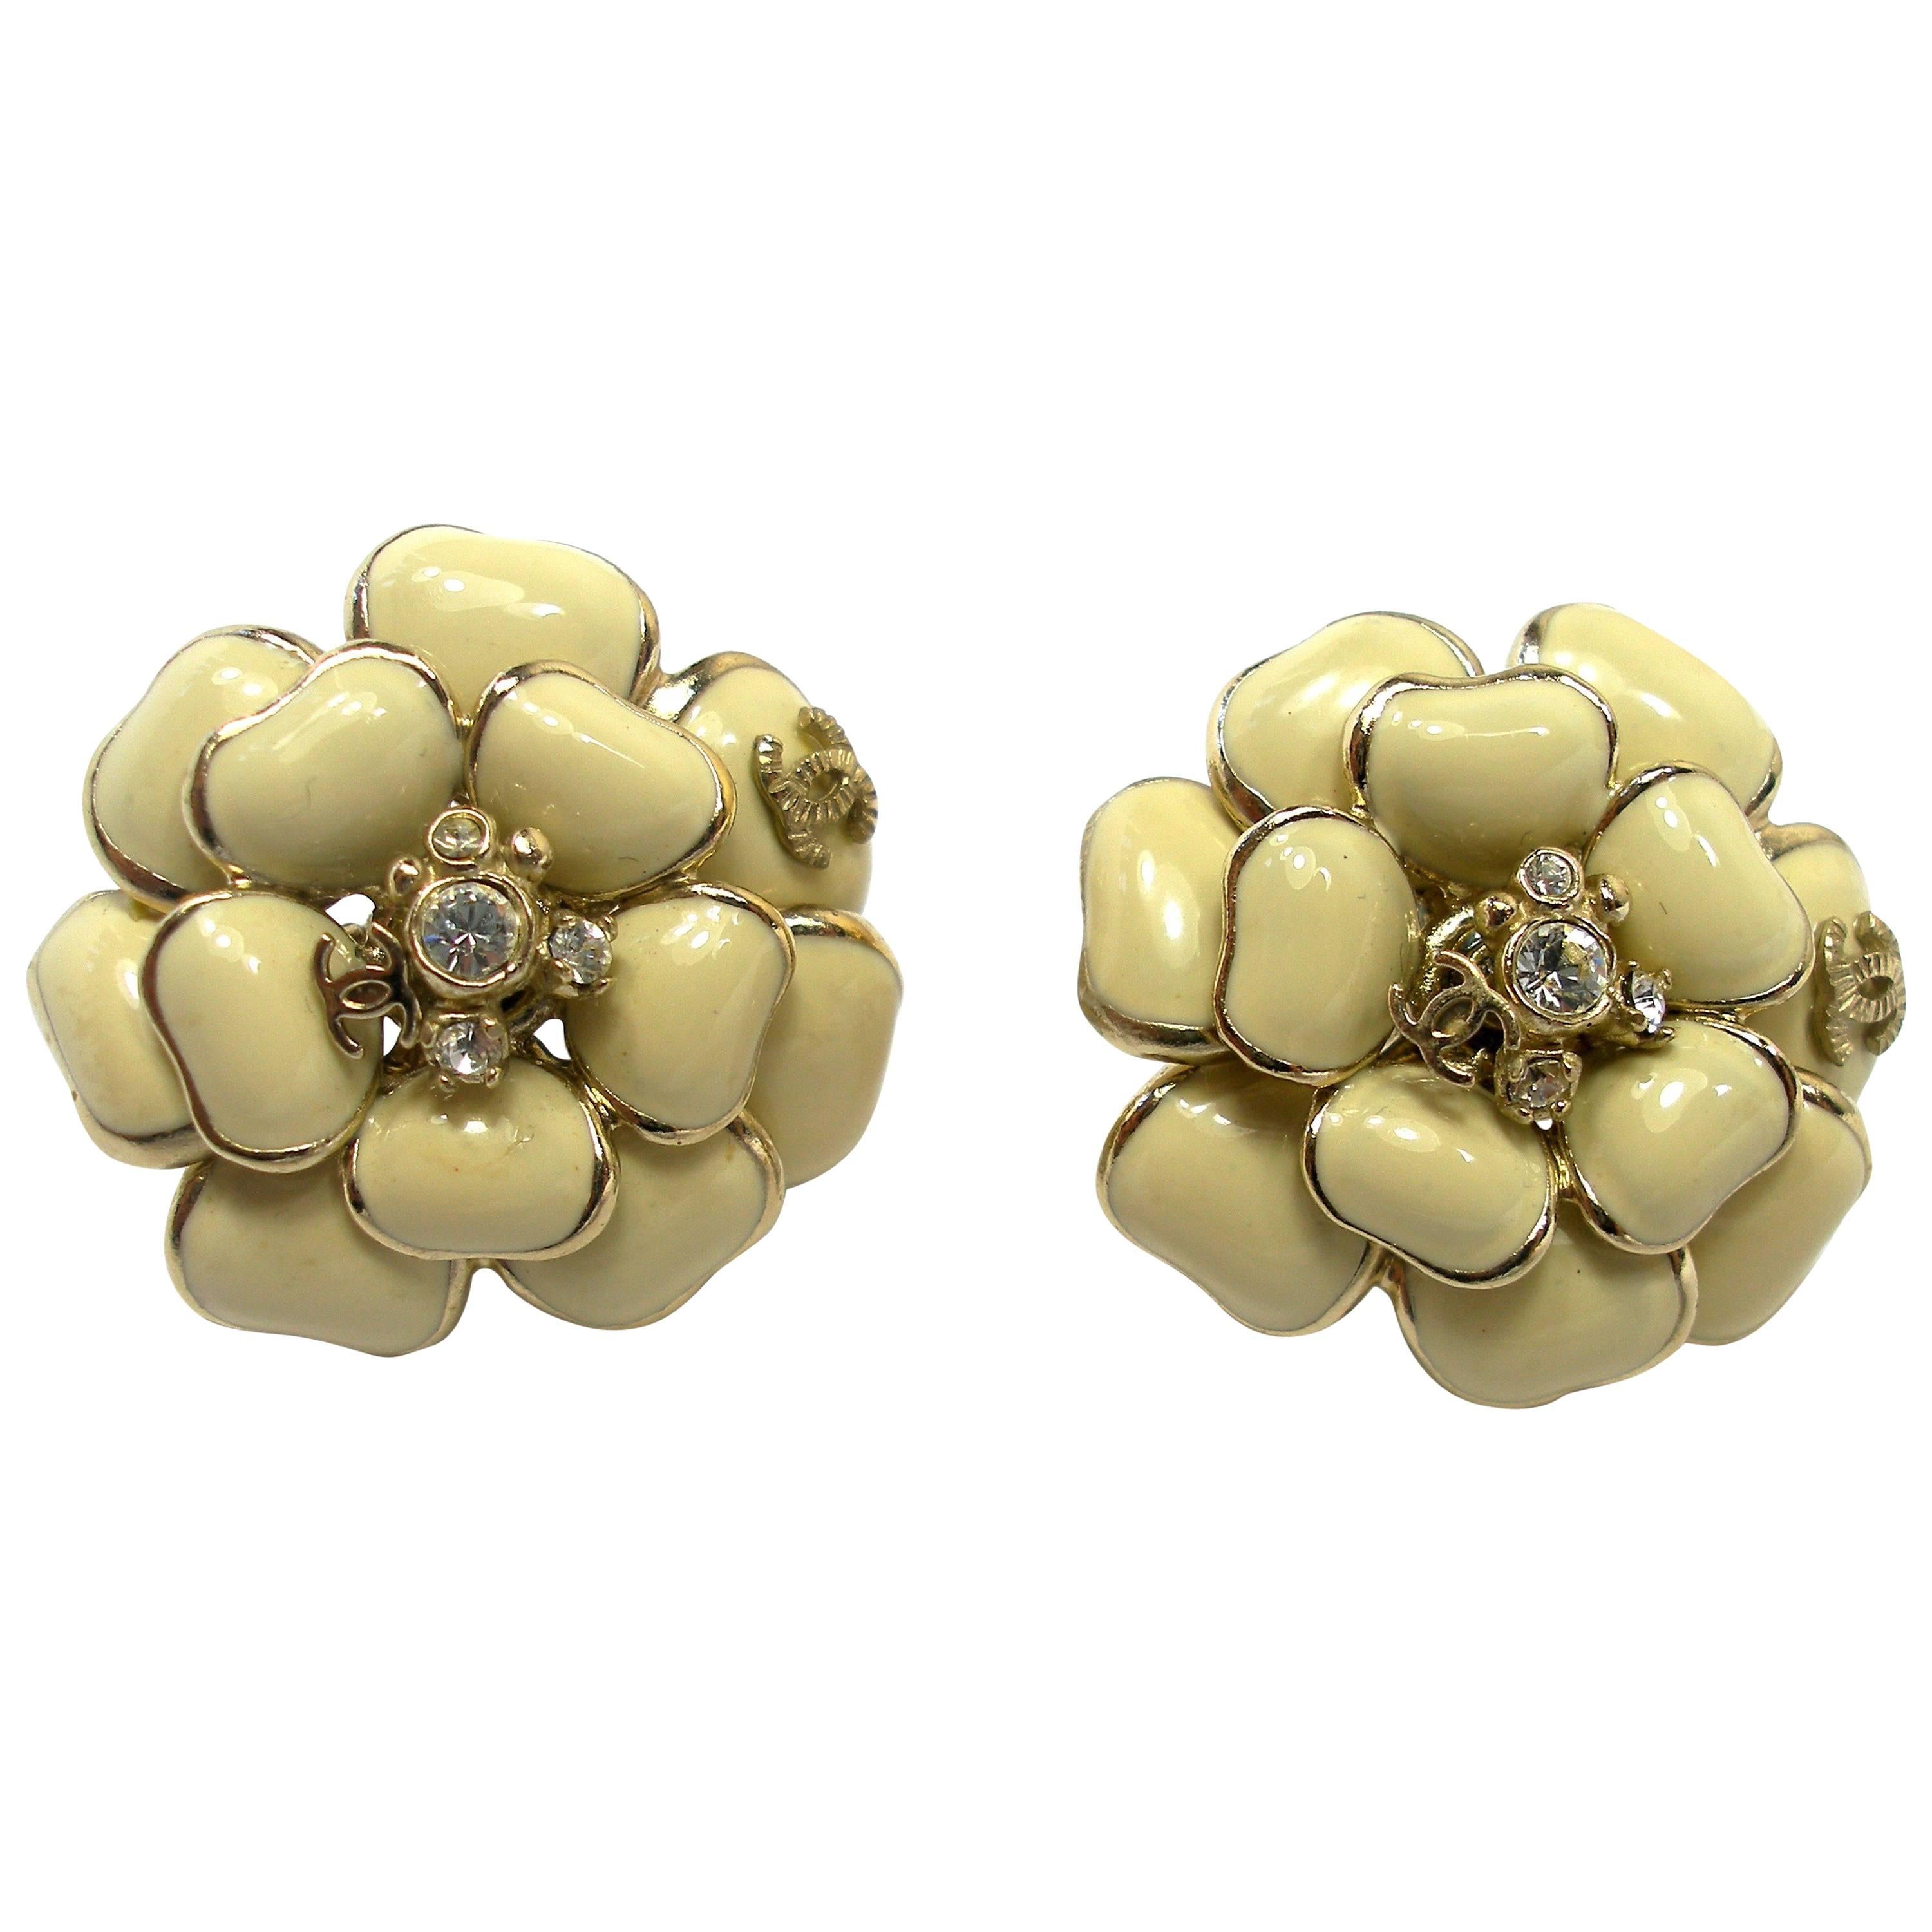 WON-DER-FULL Chanel CC Camélia Earings enamel and gold métal / RARE 